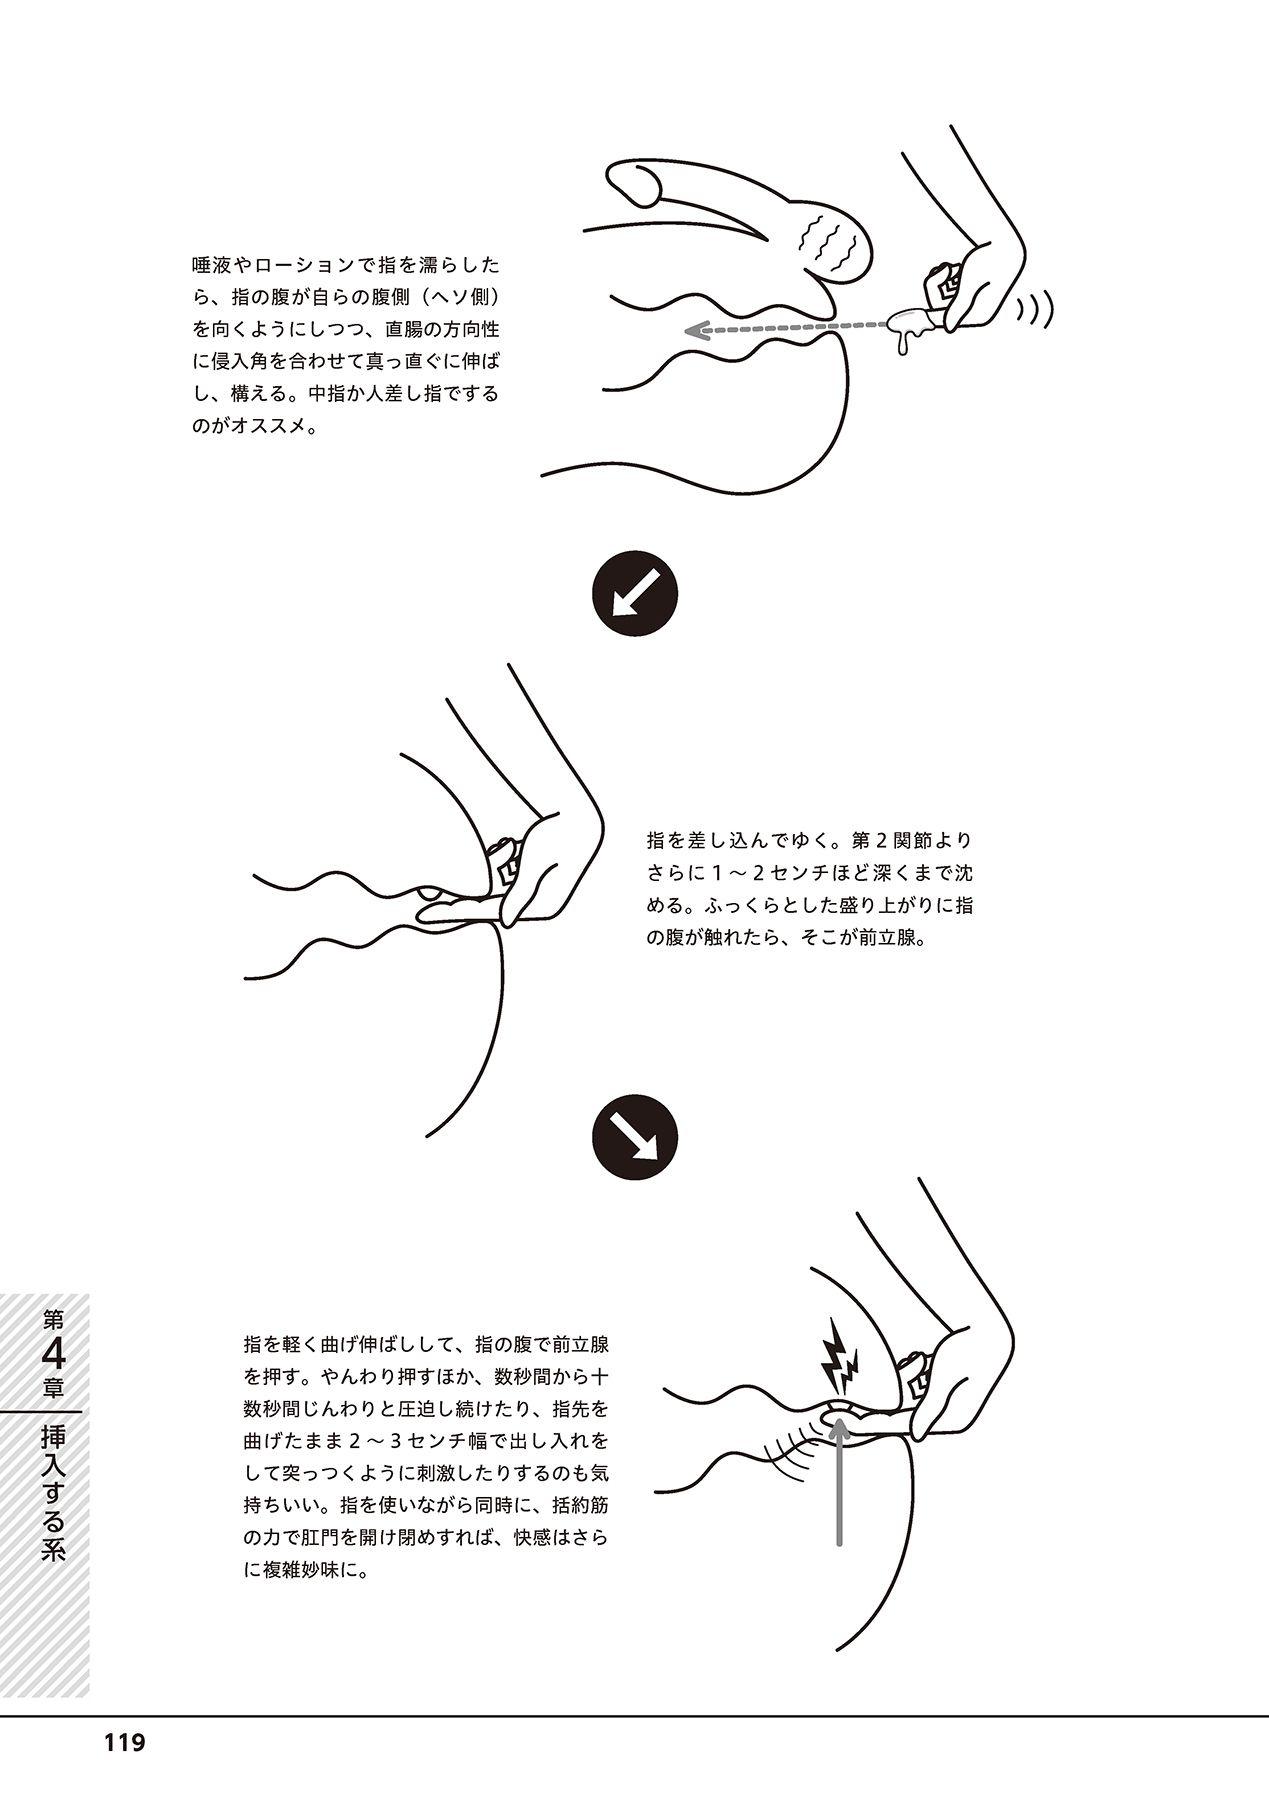 Otoko no Jii Onanie Kanzen Manual Illustration Han...... Onanie Play 120